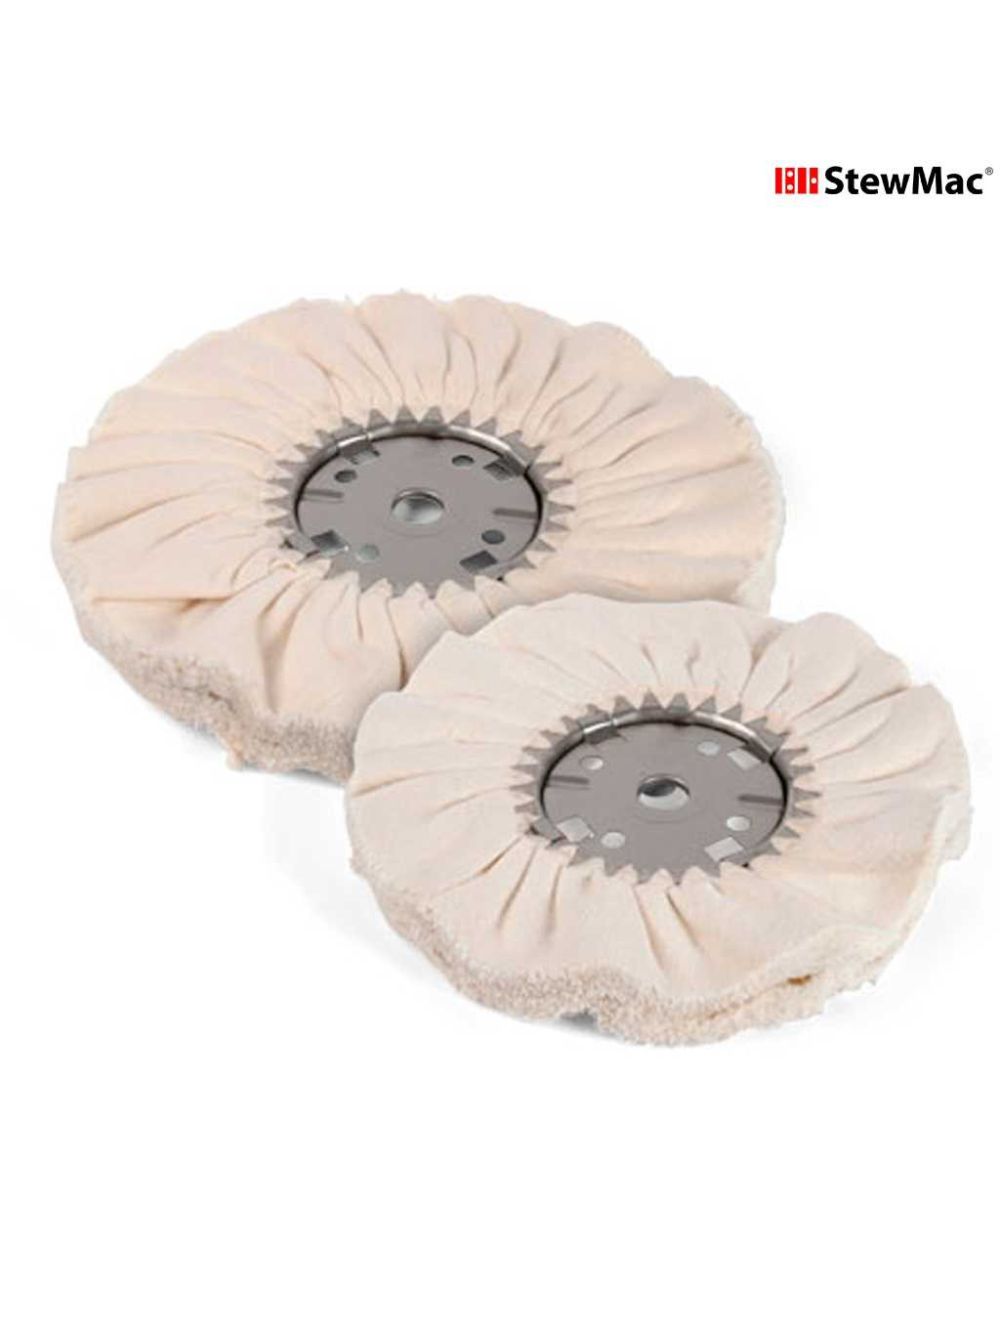 Disques de polissage Stewmac, blanchis, 14” Cotton Domet, axe 1”